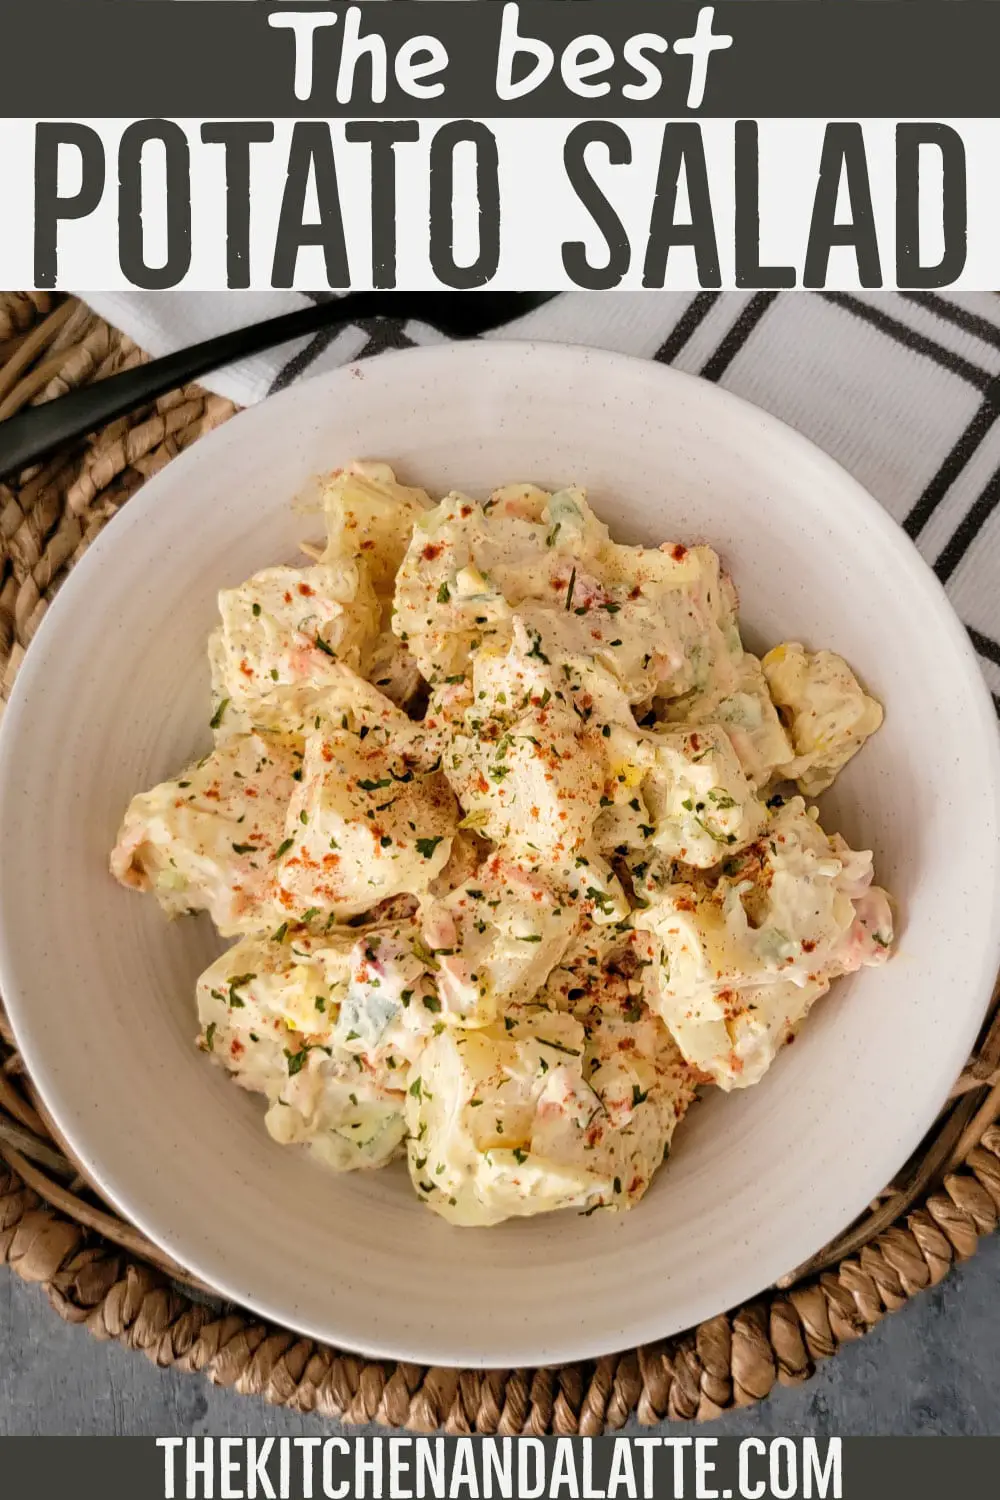 The best potato salad - potato salad in a bowl to be eaten. Pinterest image